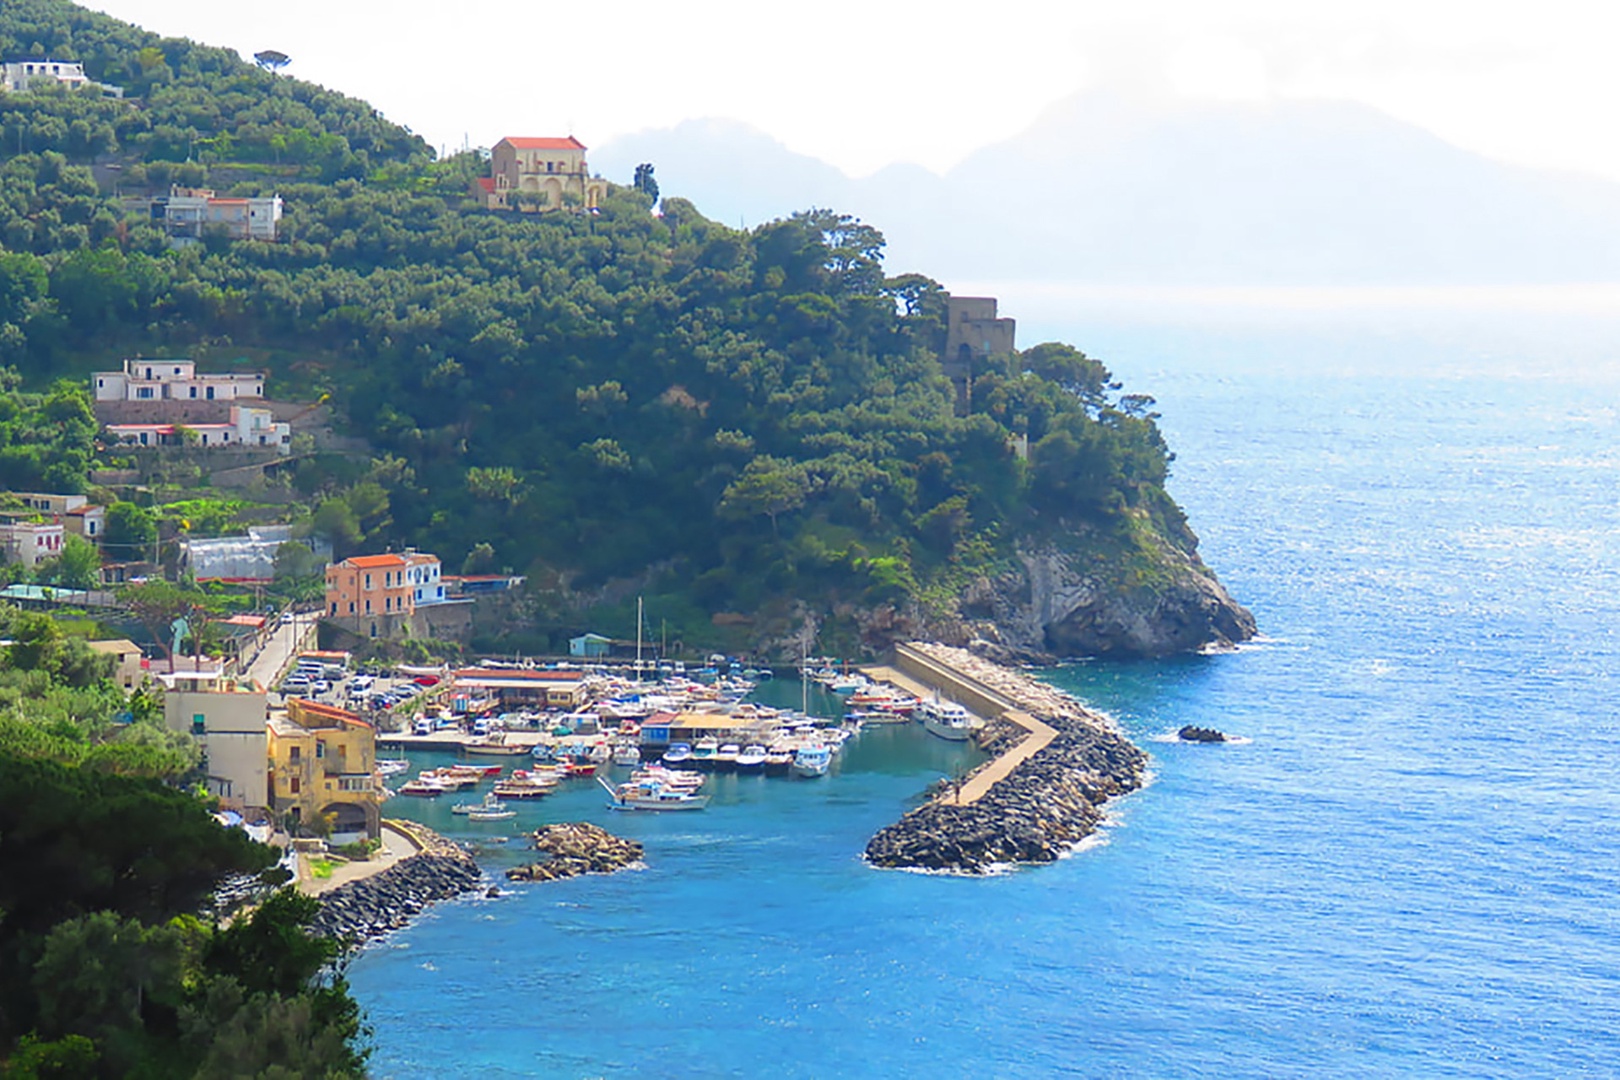 Tiny port of Marina della Lobra is about 1 km (0.6 mile) walk from the seaside area below the villa.